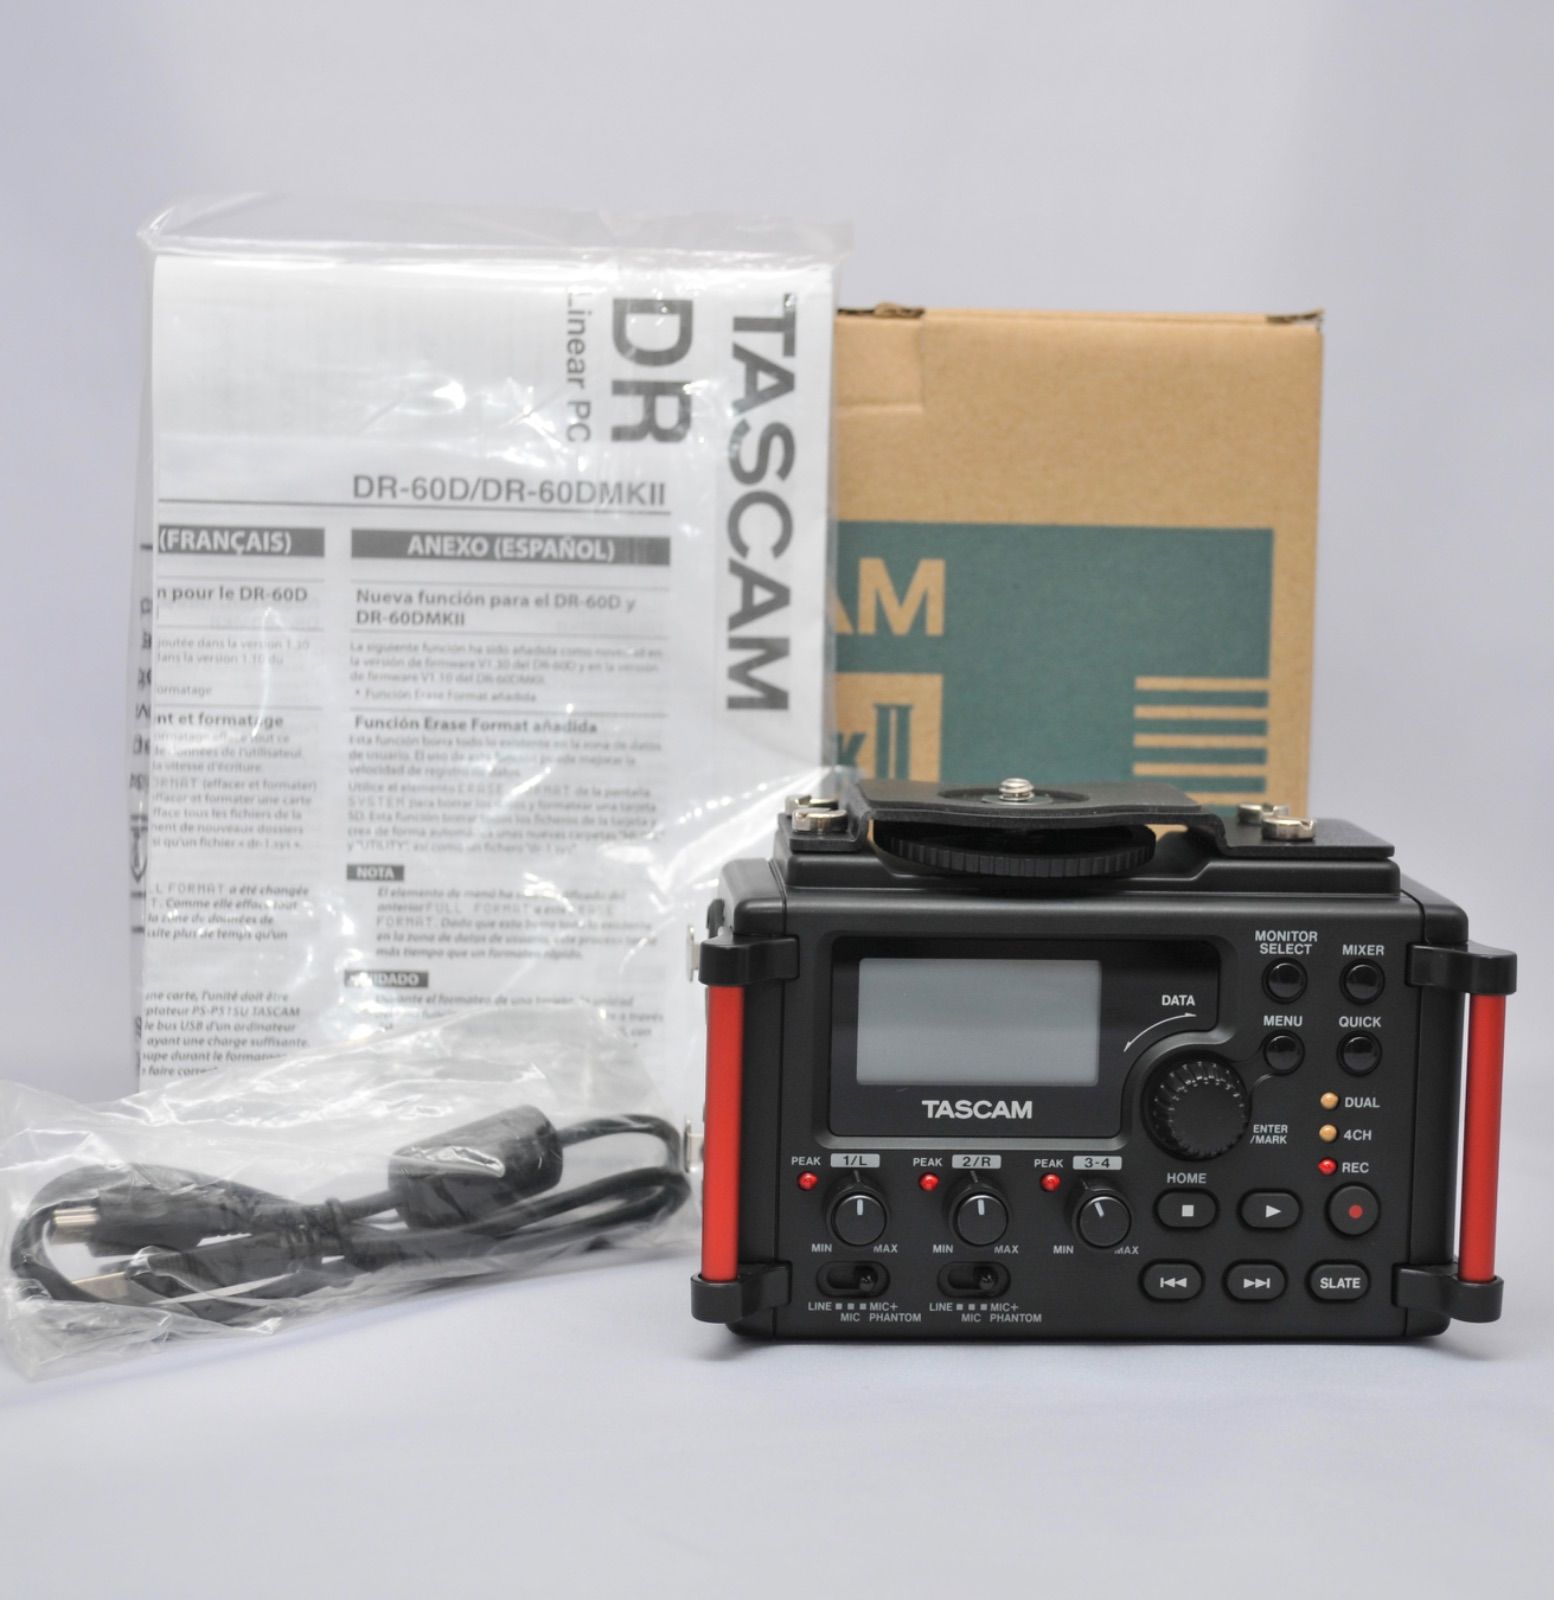 TASCAM(タスカム) DR-60DMKII DSLR用 リニアPCMレコーダー - 〜安心